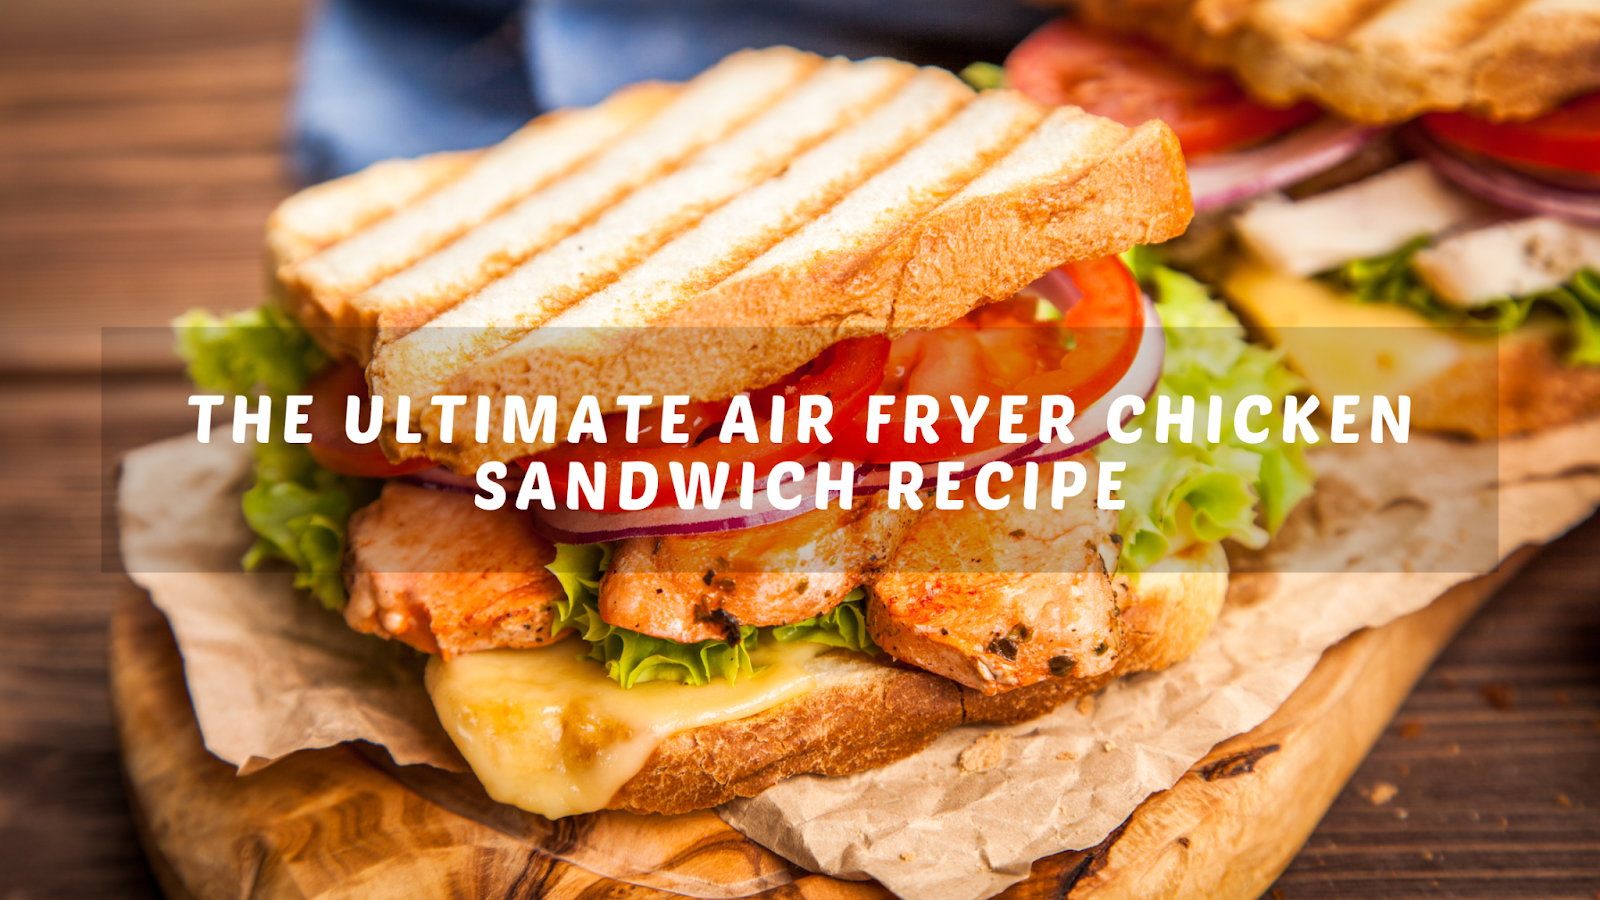 The Ultimate Air Fryer Chicken Sandwich Recipe